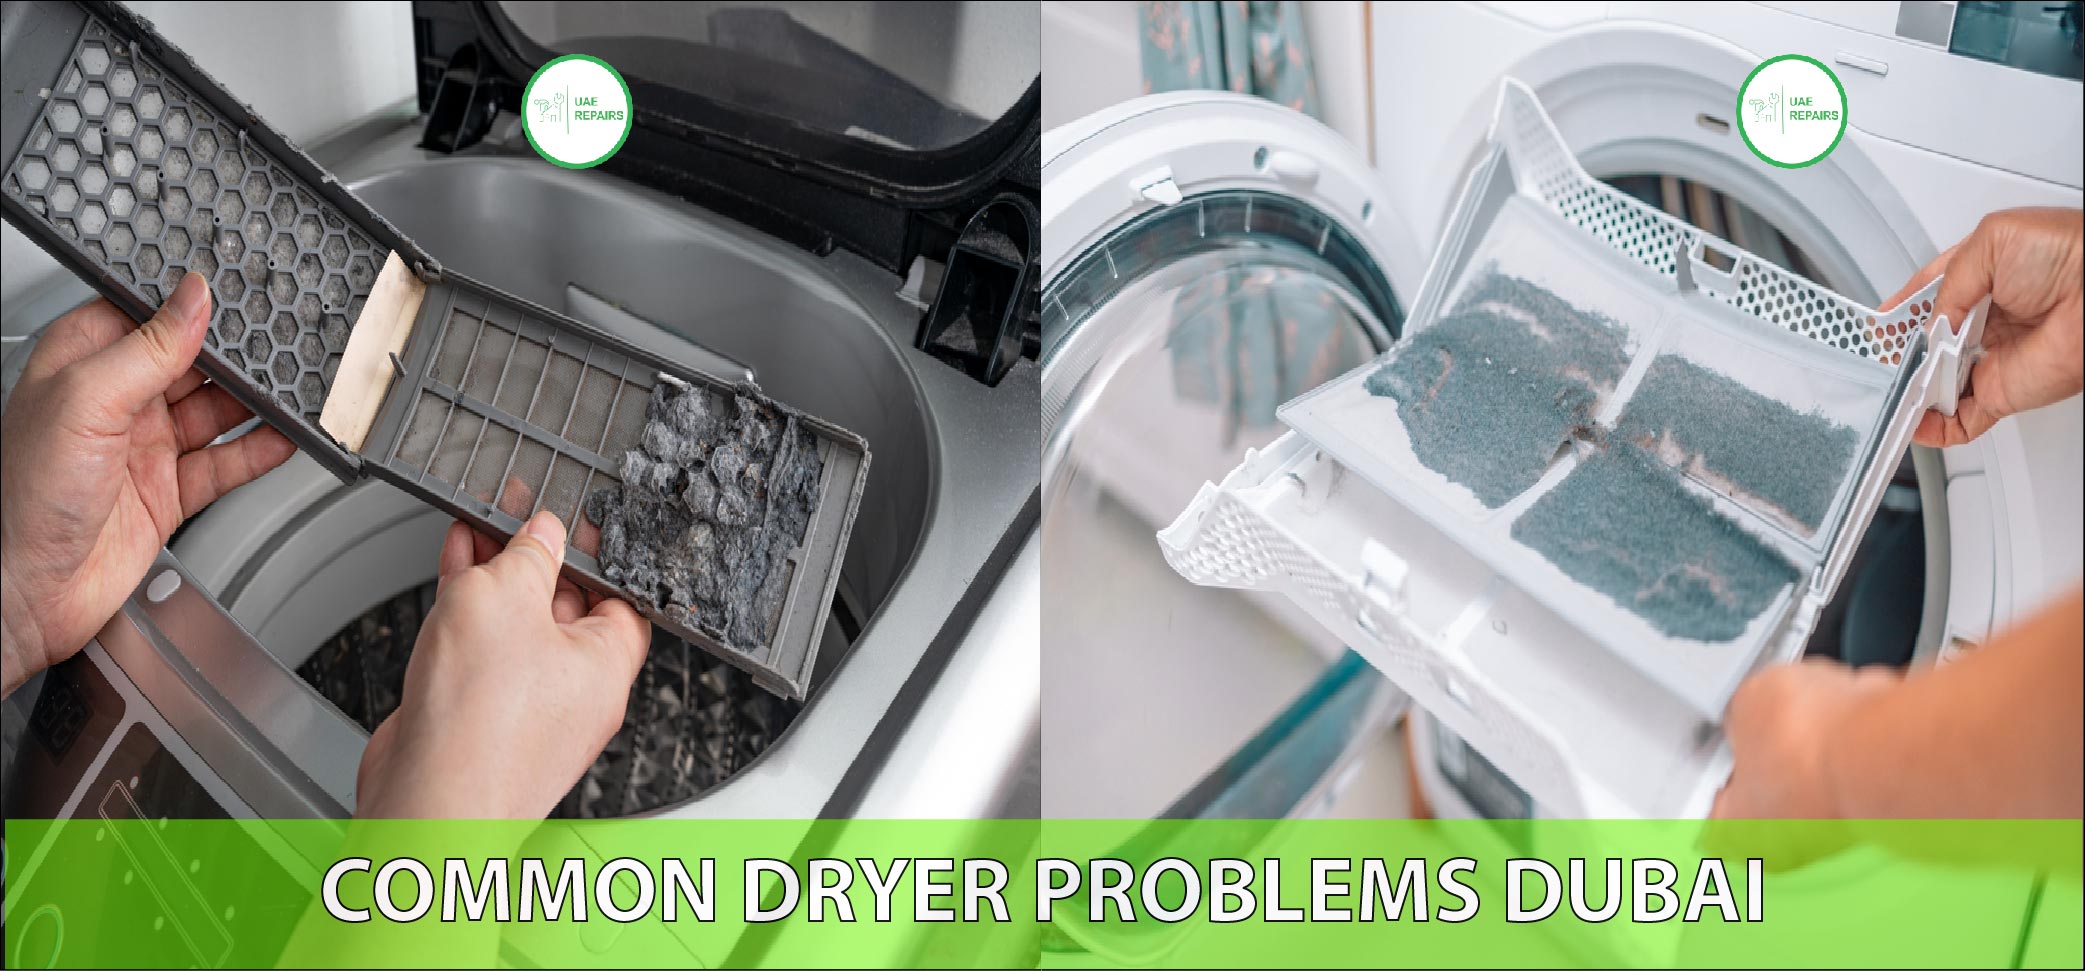 UAE REPAIRS Most Common Dryer Problems